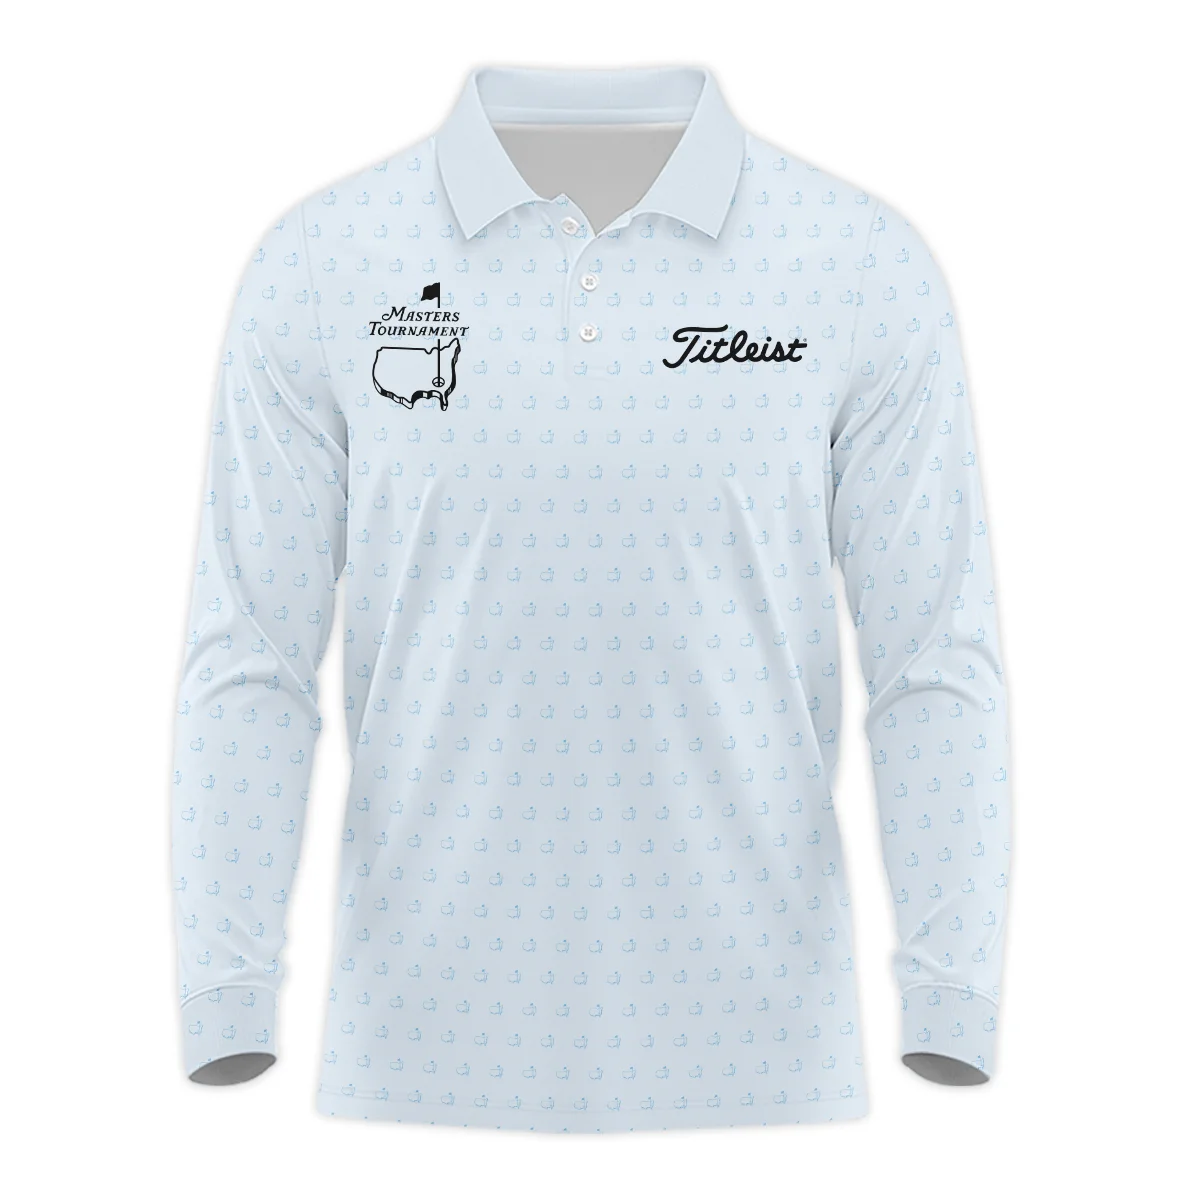 Pattern Masters Tournament Titleist Quarter-Zip Jacket White Light Blue Color Pattern Logo  Quarter-Zip Jacket